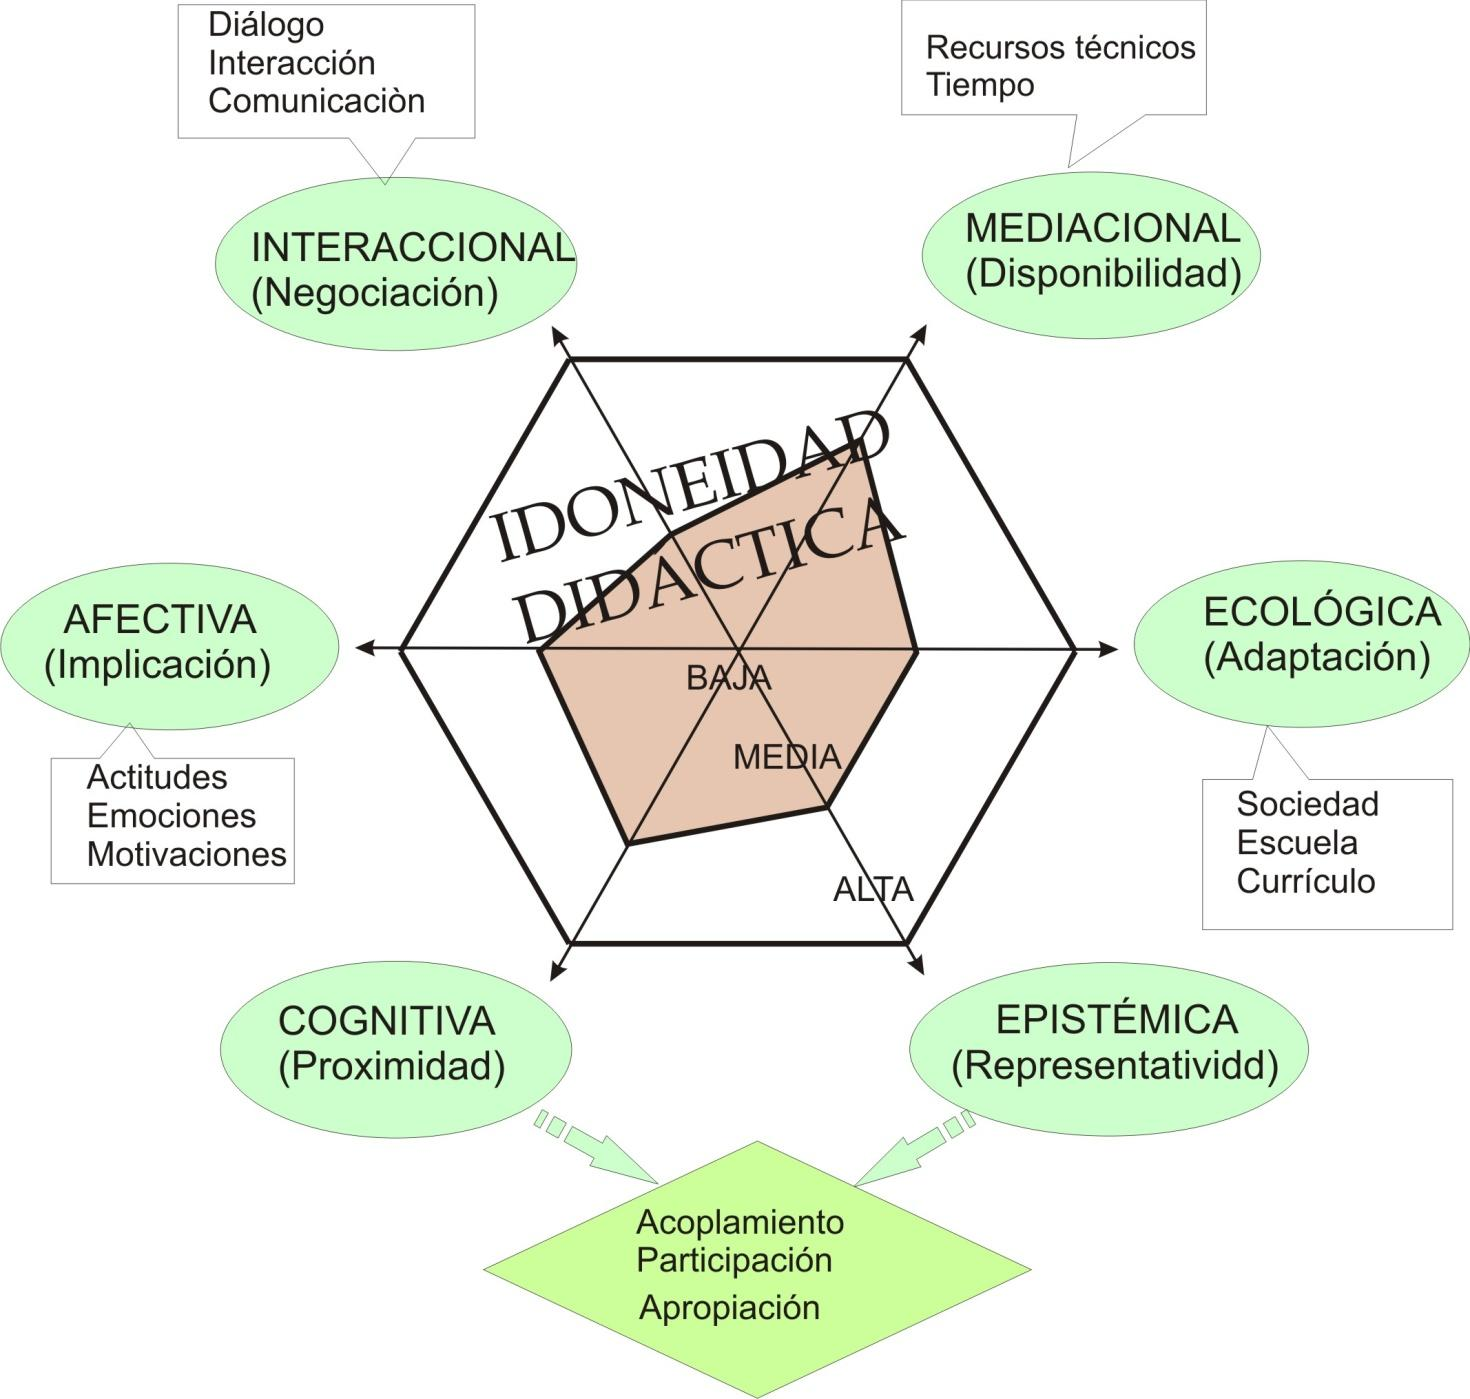 Idoneidad didáctica Godino, J. D. (2011).